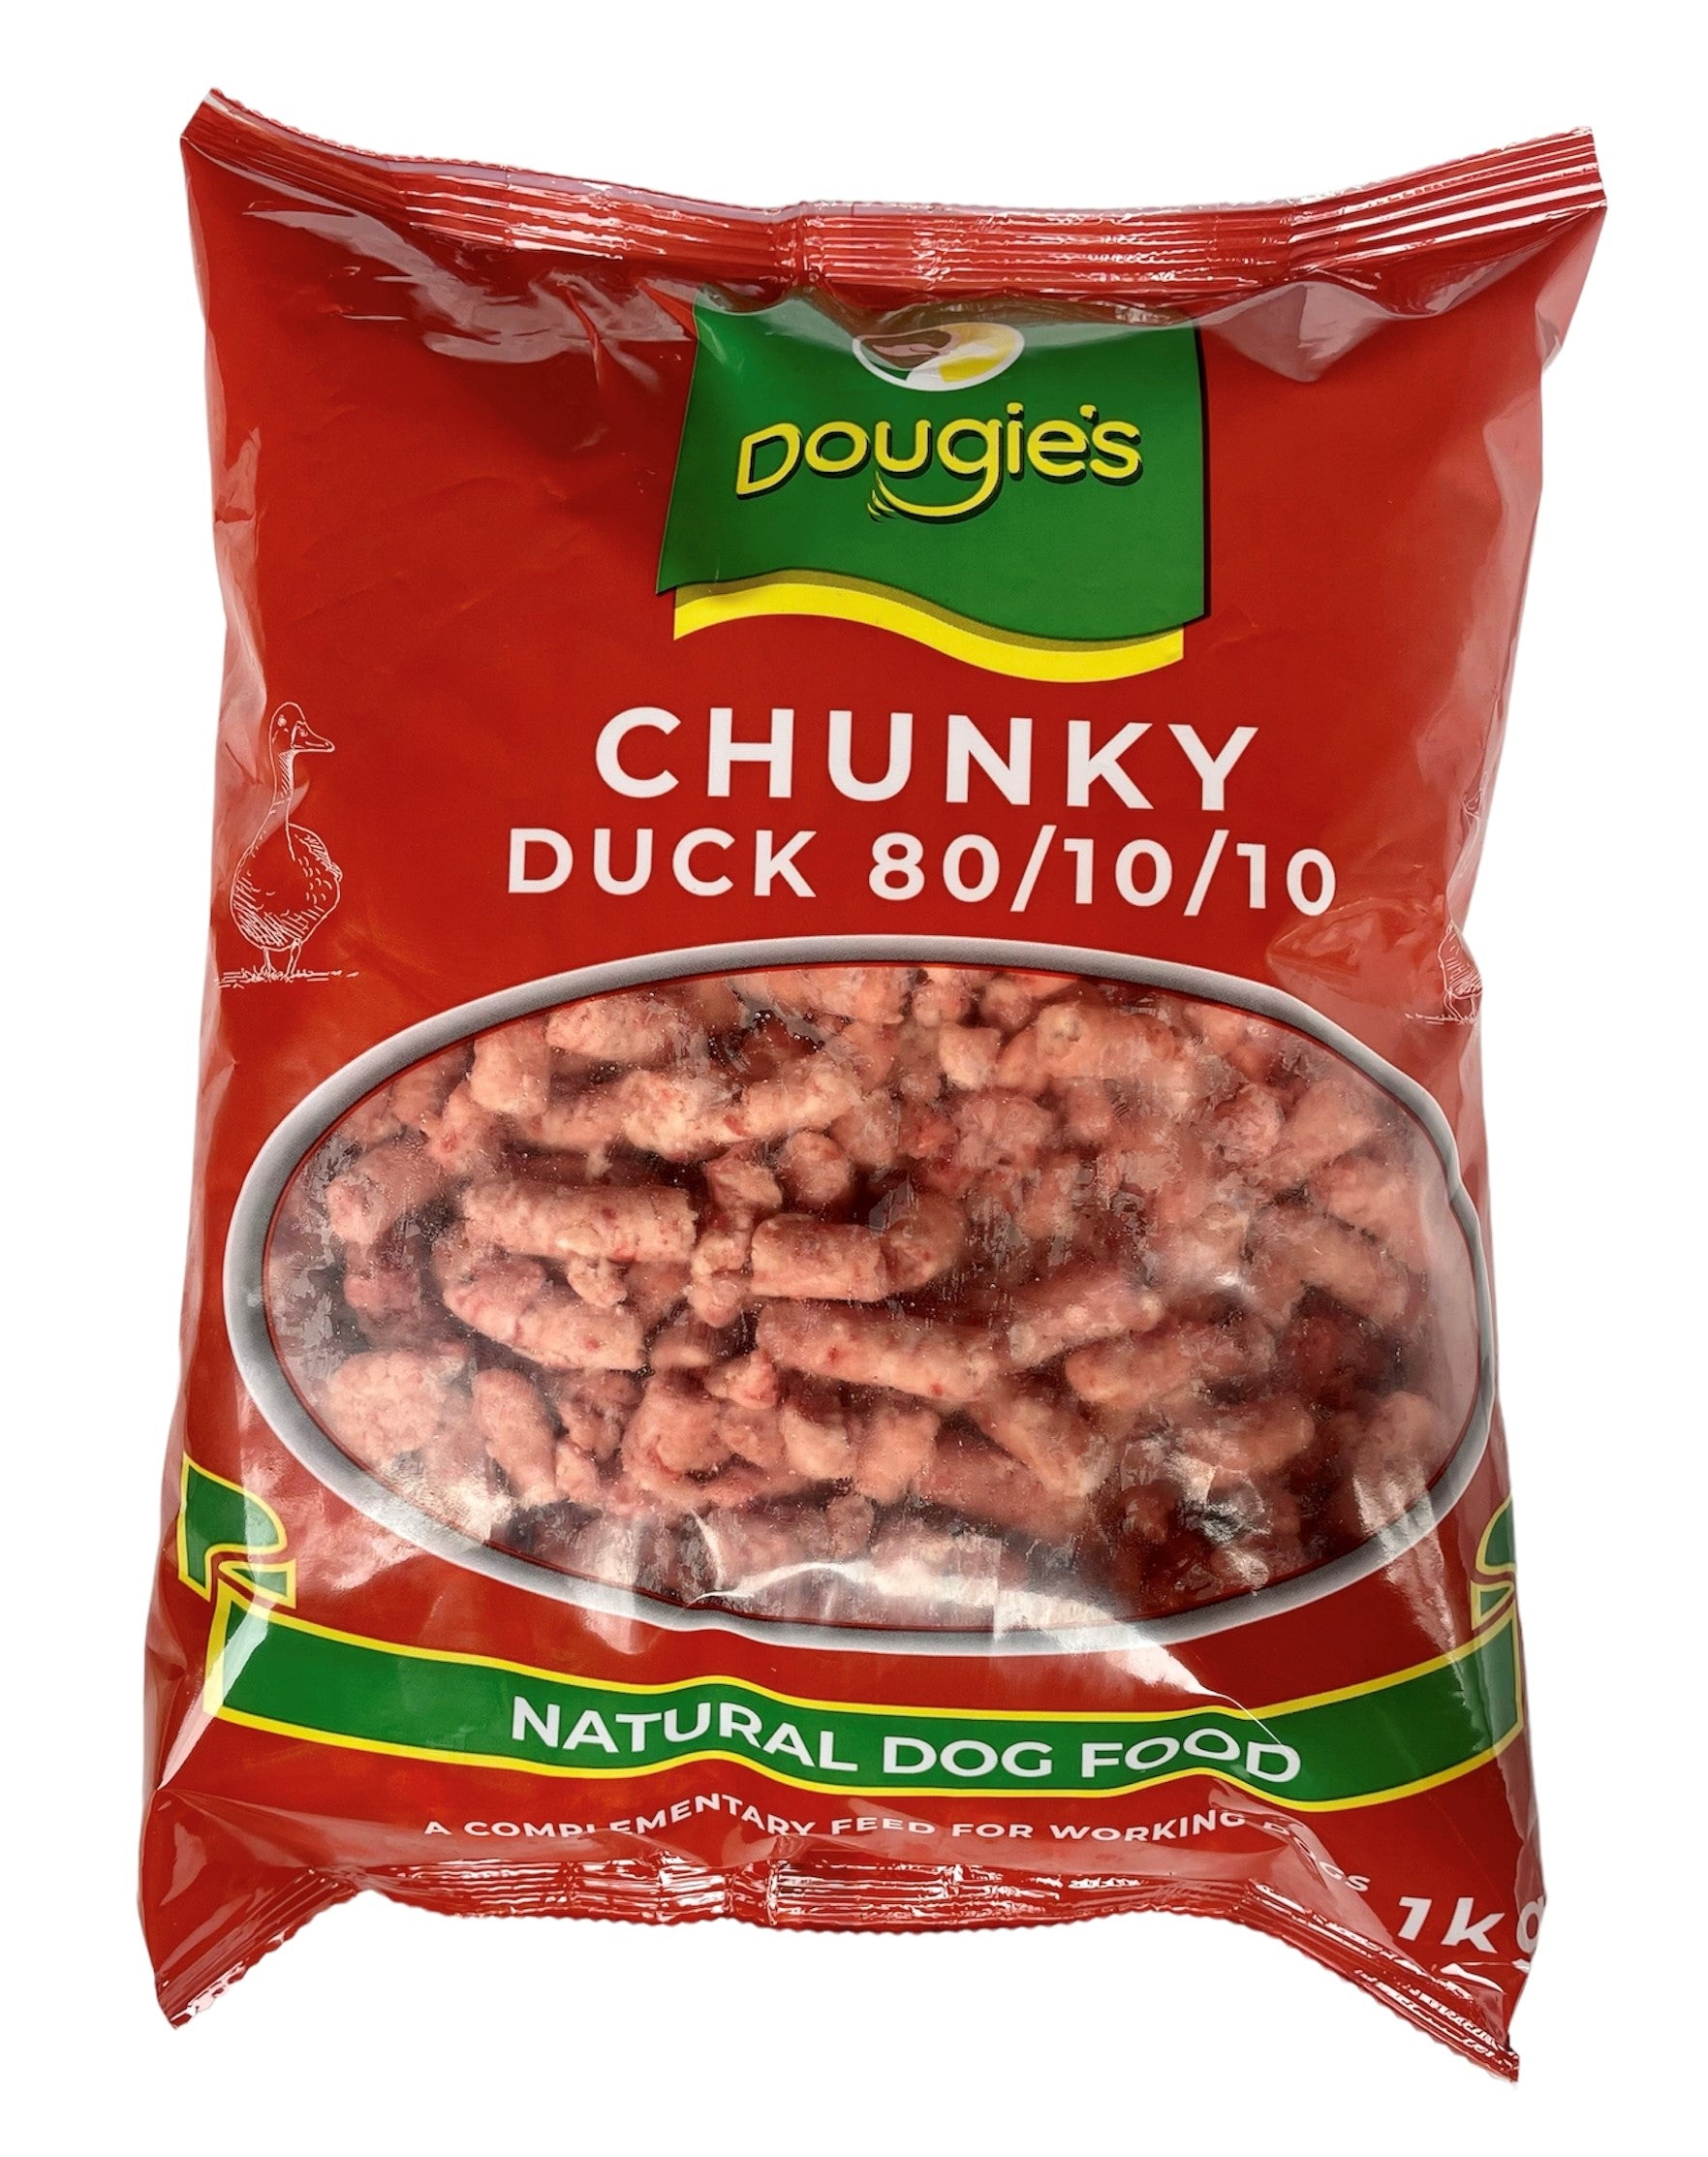 Dougies Chunky Duck 80:10:10 1kg